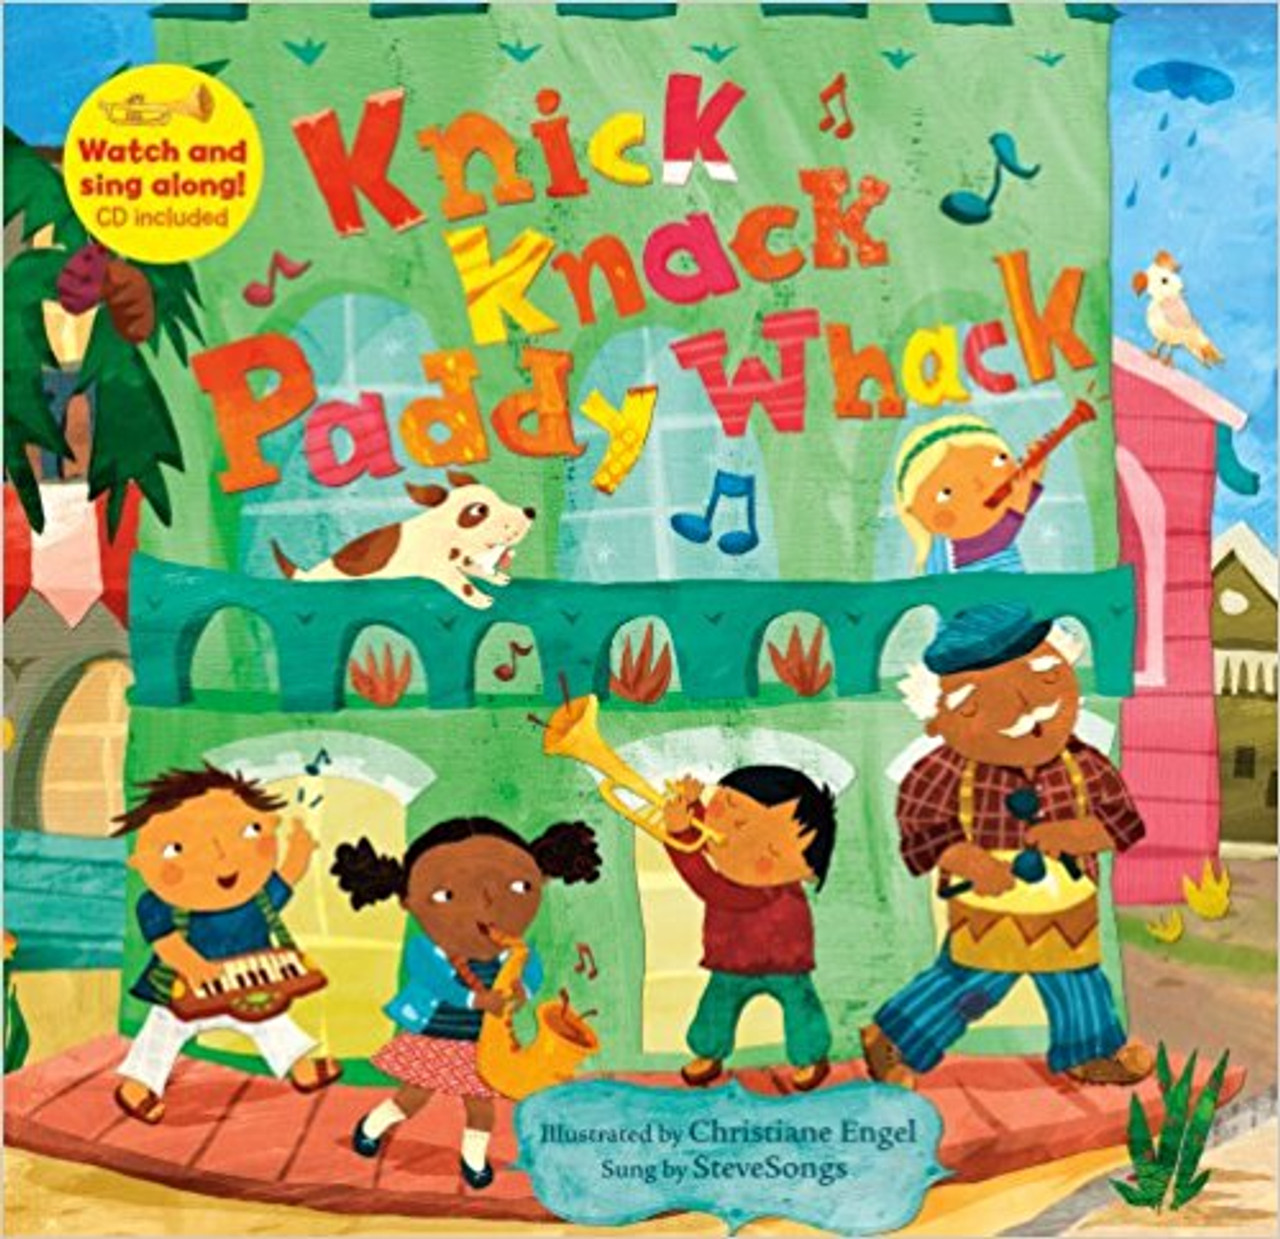 Knick Knack Paddy Whack by Christiane Engel